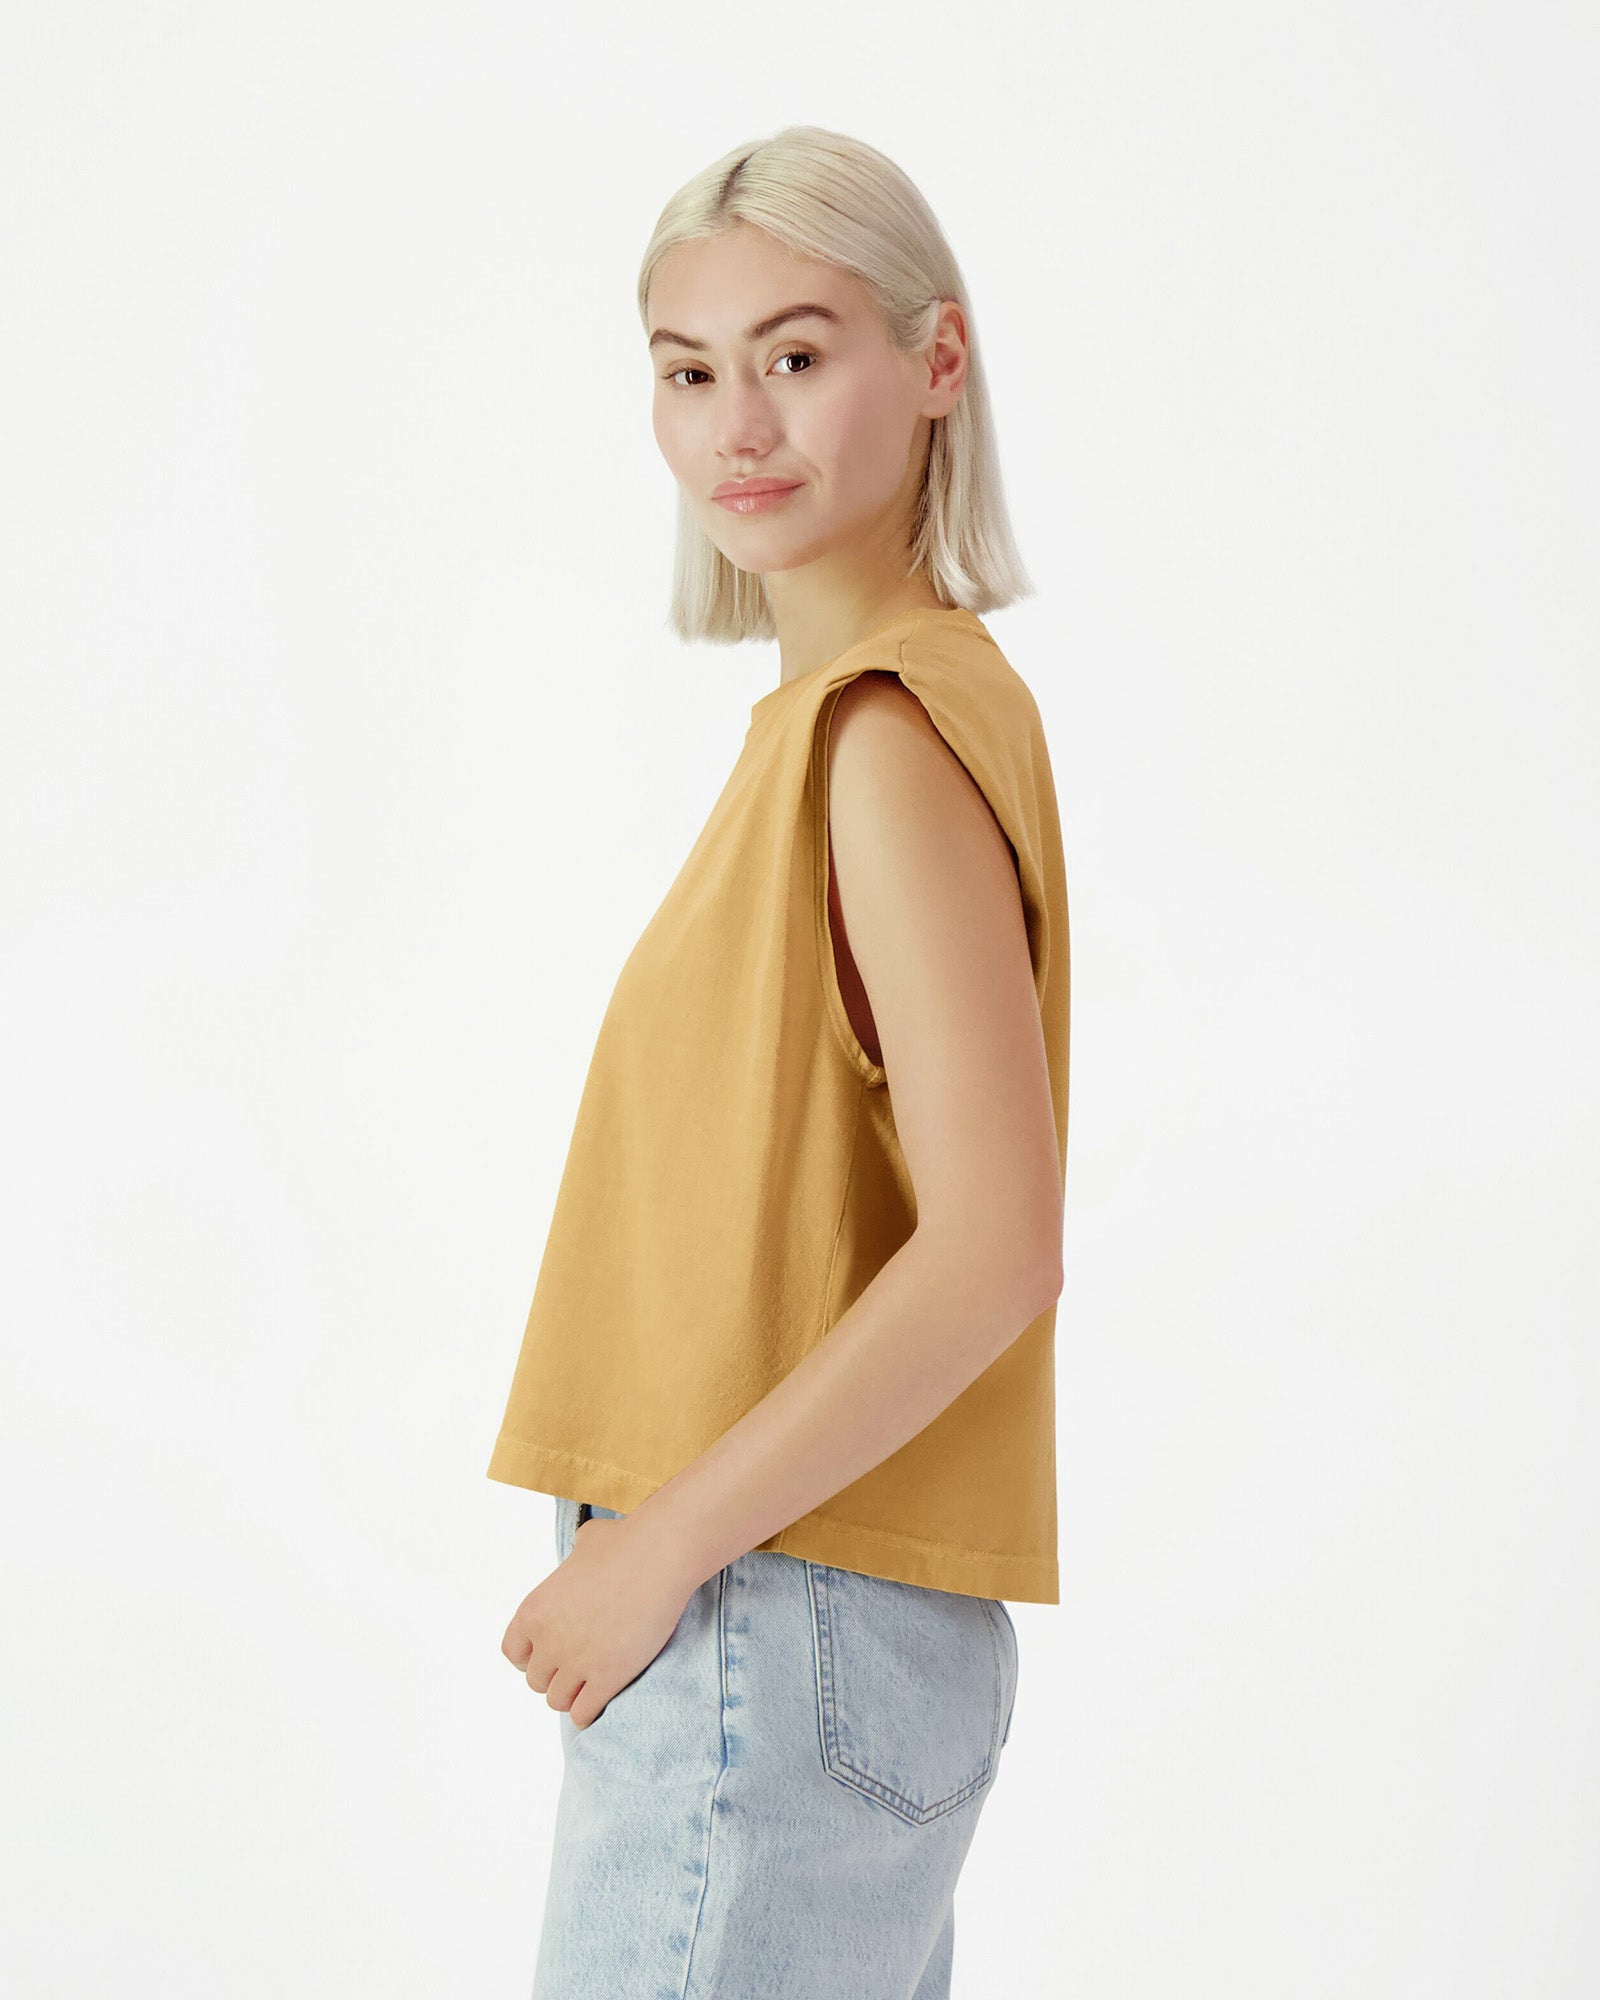 Garment Dyed Women's Muscle T-shirt - Faded Mustard